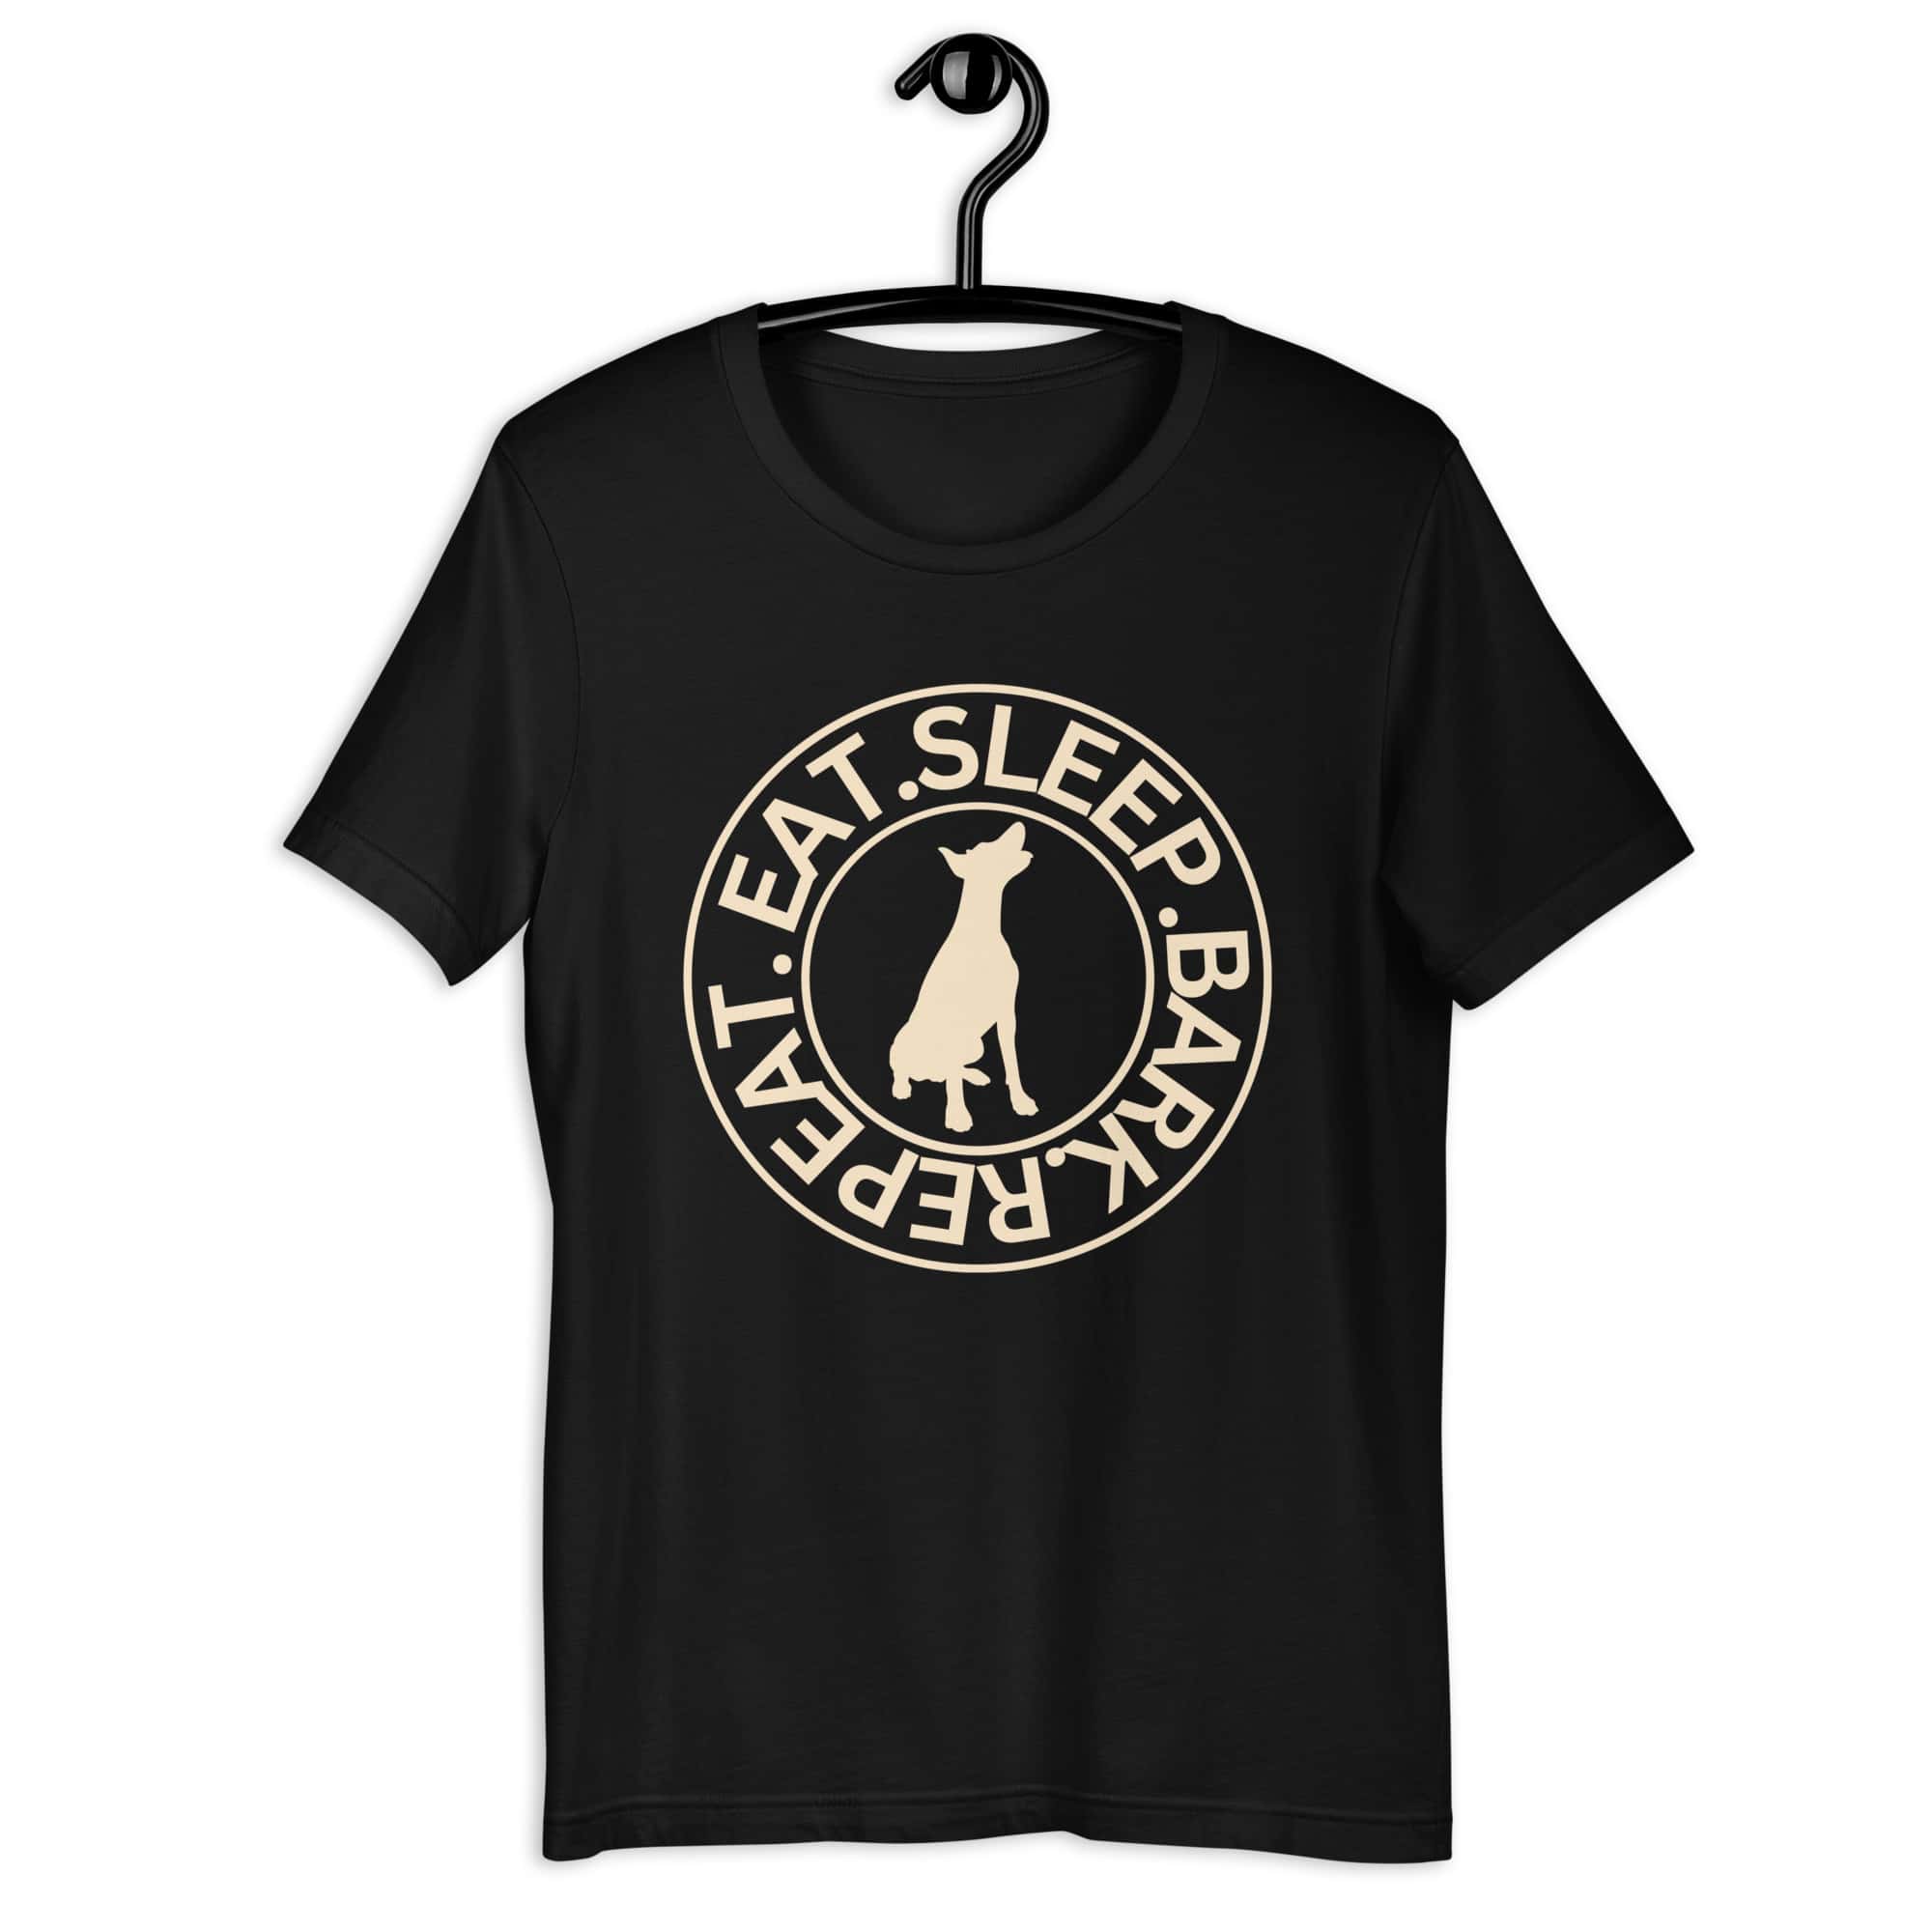 Eat Sleep Bark Repeat Terrier Unisex T-Shirt. Black